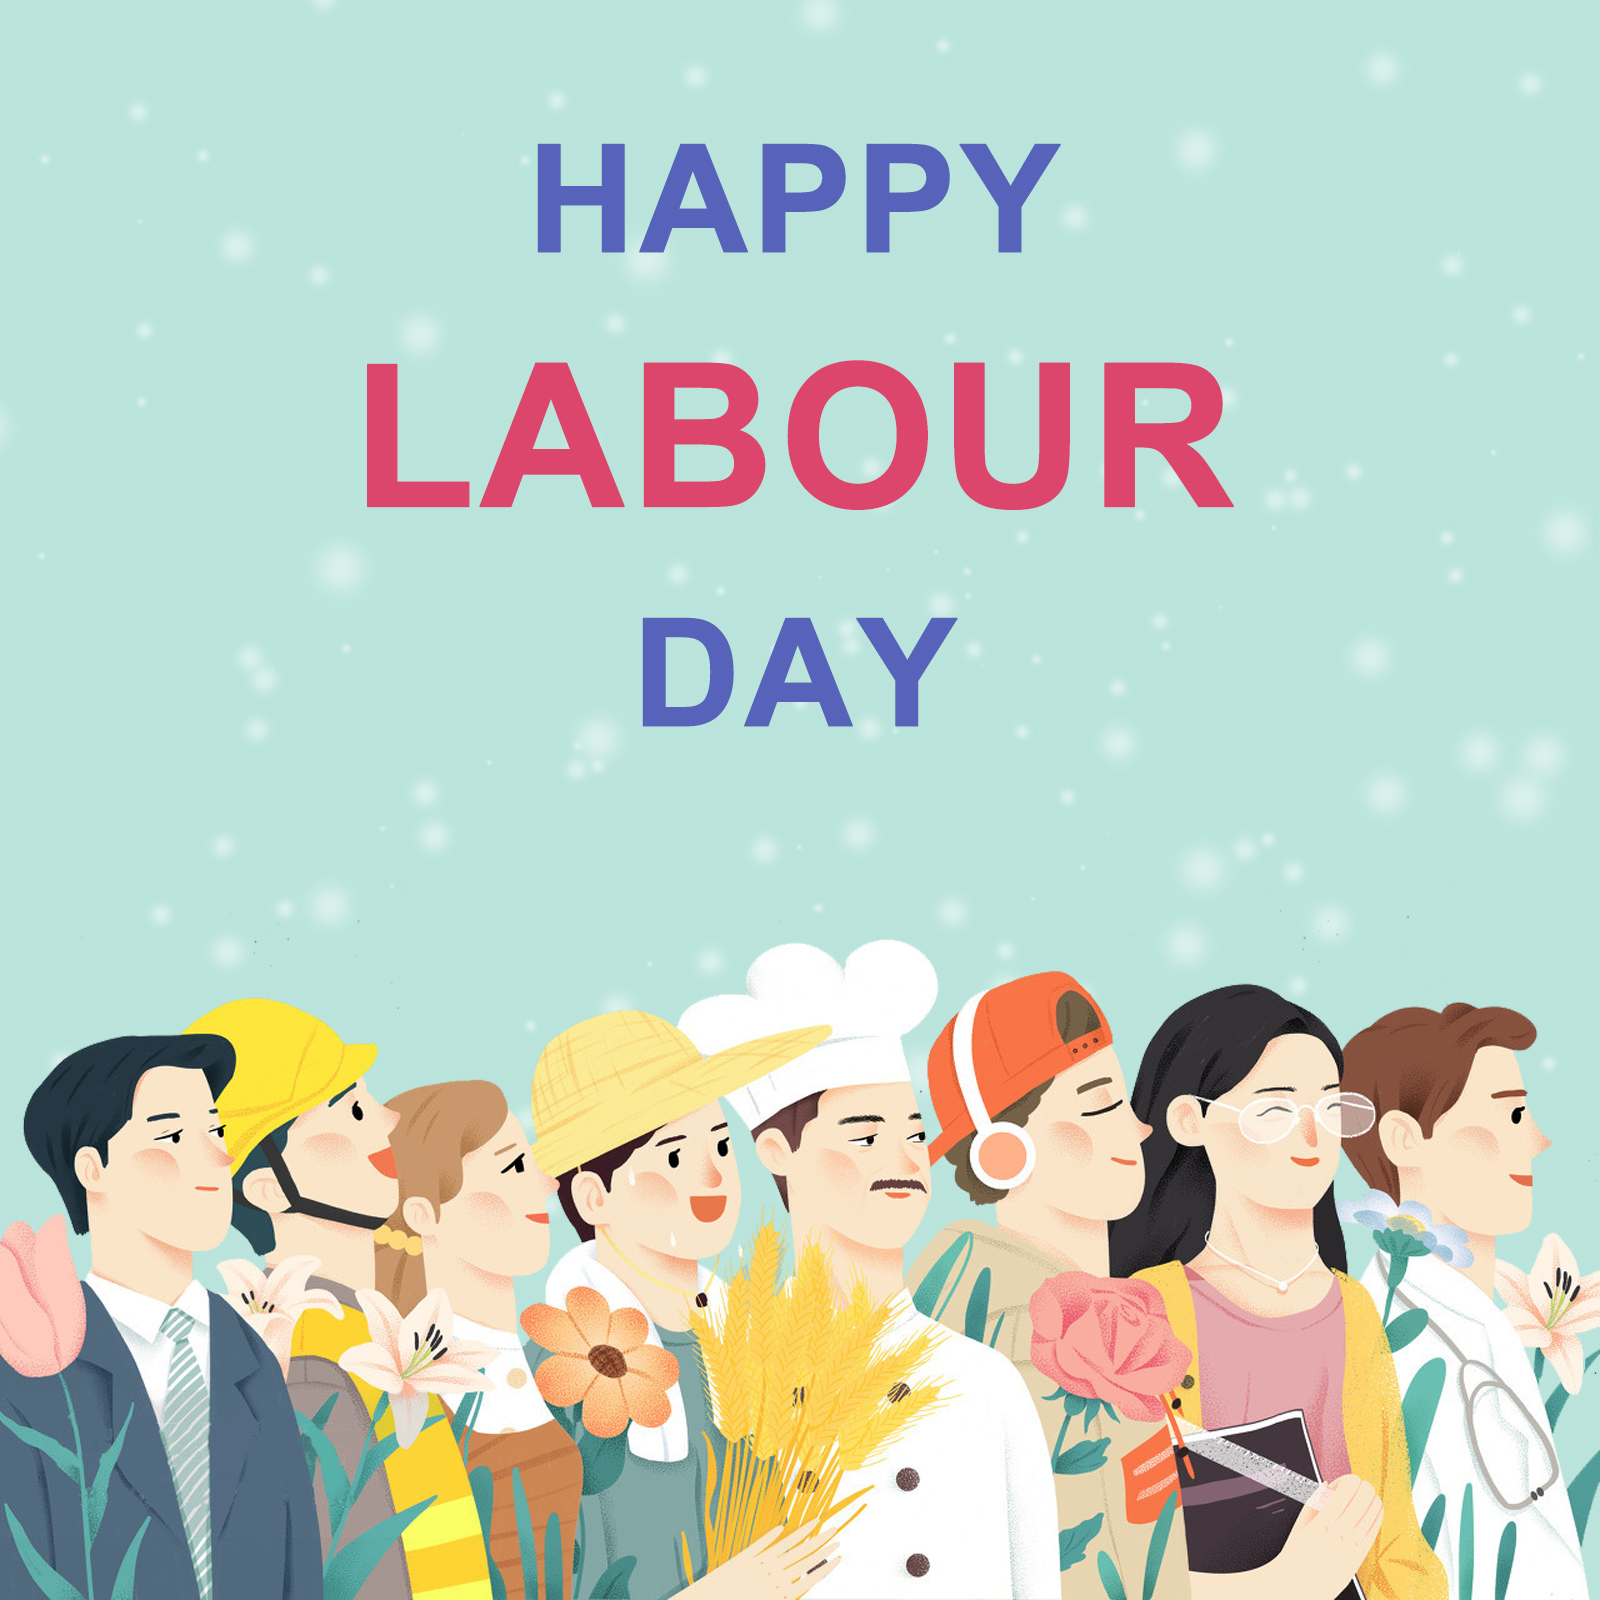 CNLonQcom wishes you a happy Labor Day!